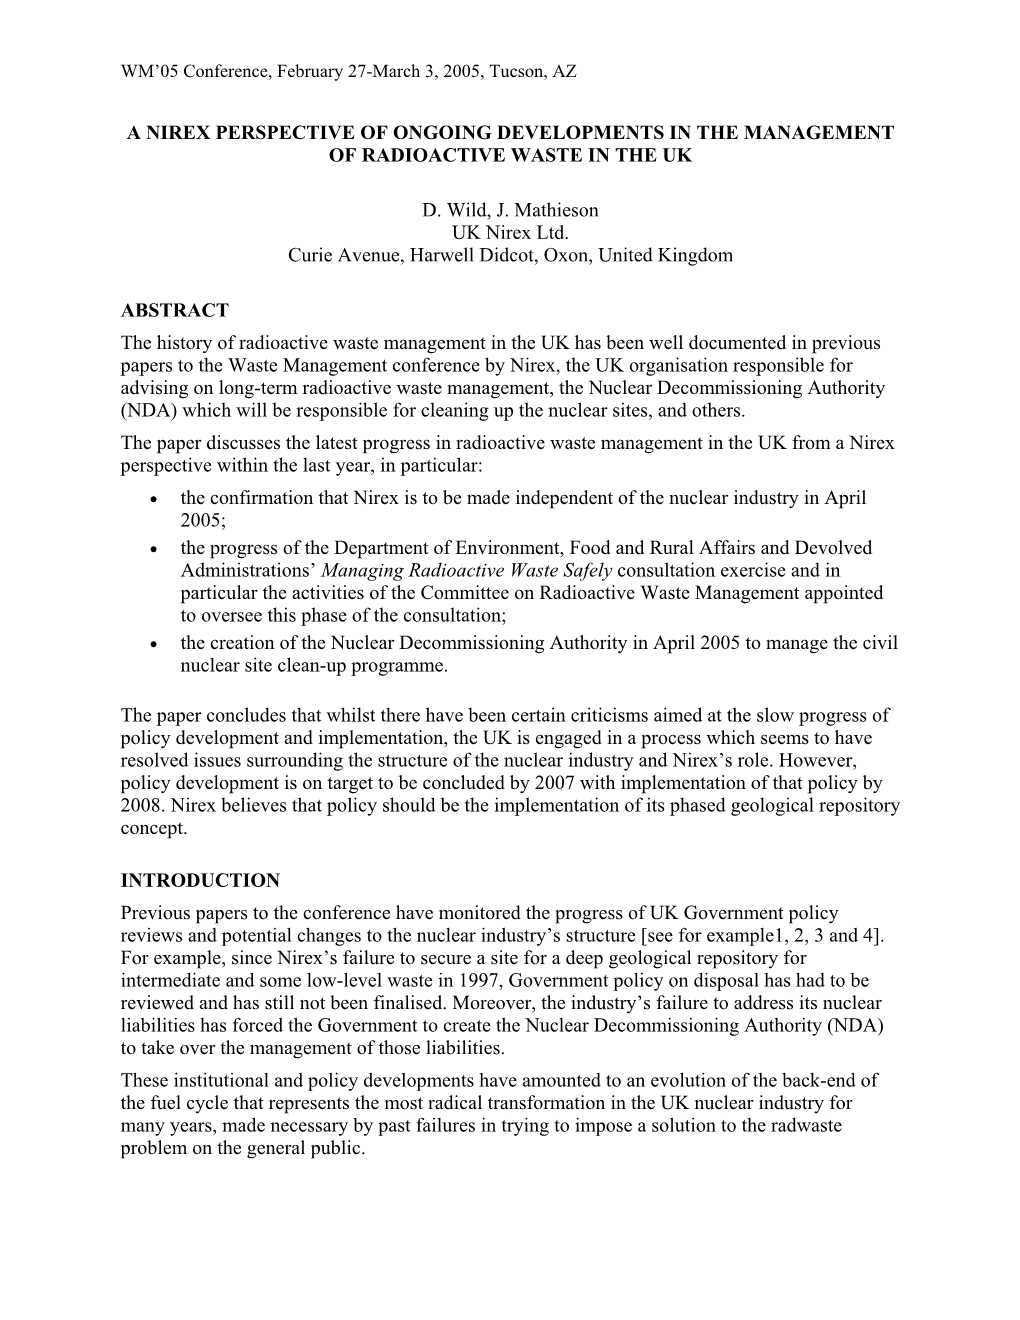 Proceedings of WM’04 Feb